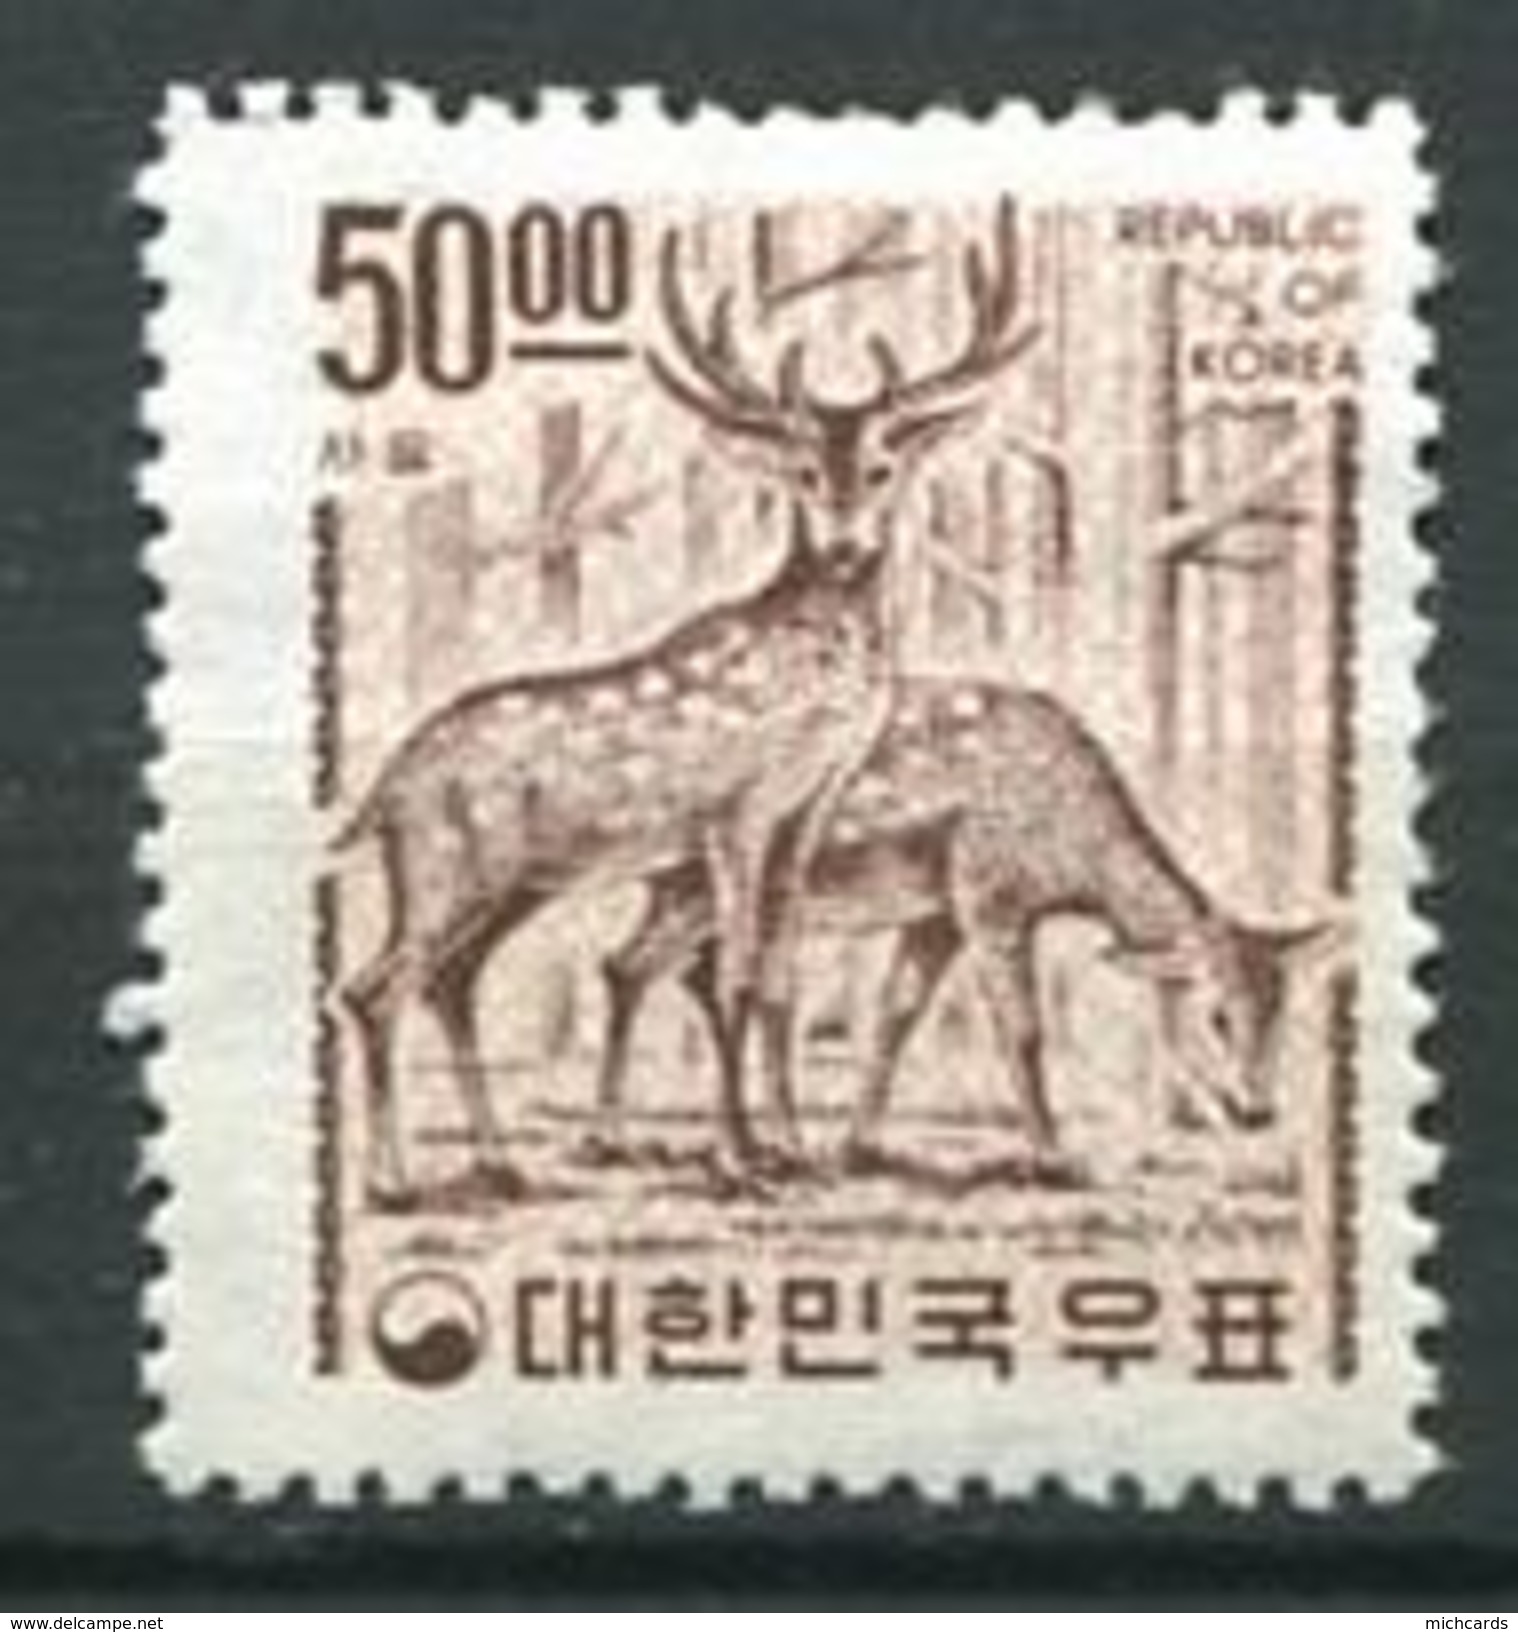 207 COREE SUD 1967 - Yvert 473 Decentre A Droite - Cerf - Neuf ** (MNH) Sans Trace De Charniere - Corea Del Sud